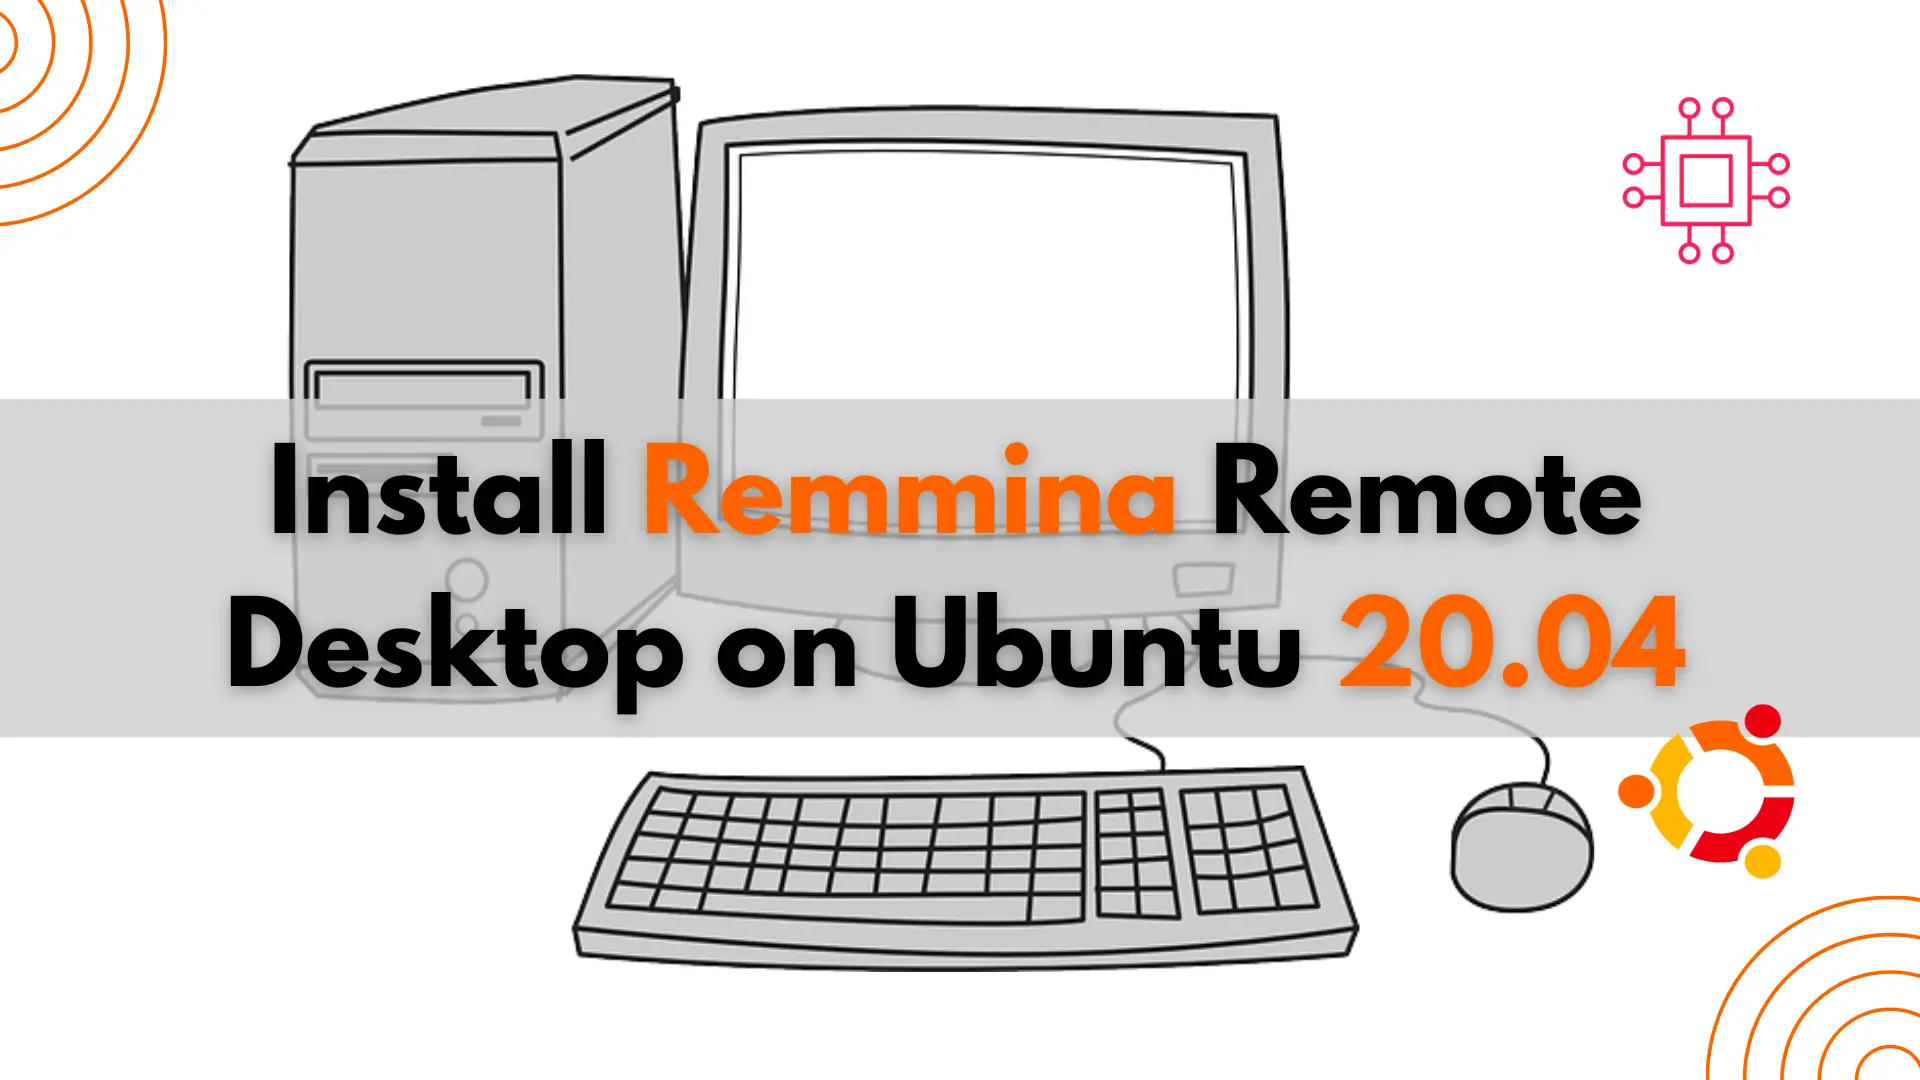 Install Remmina on Ubuntu